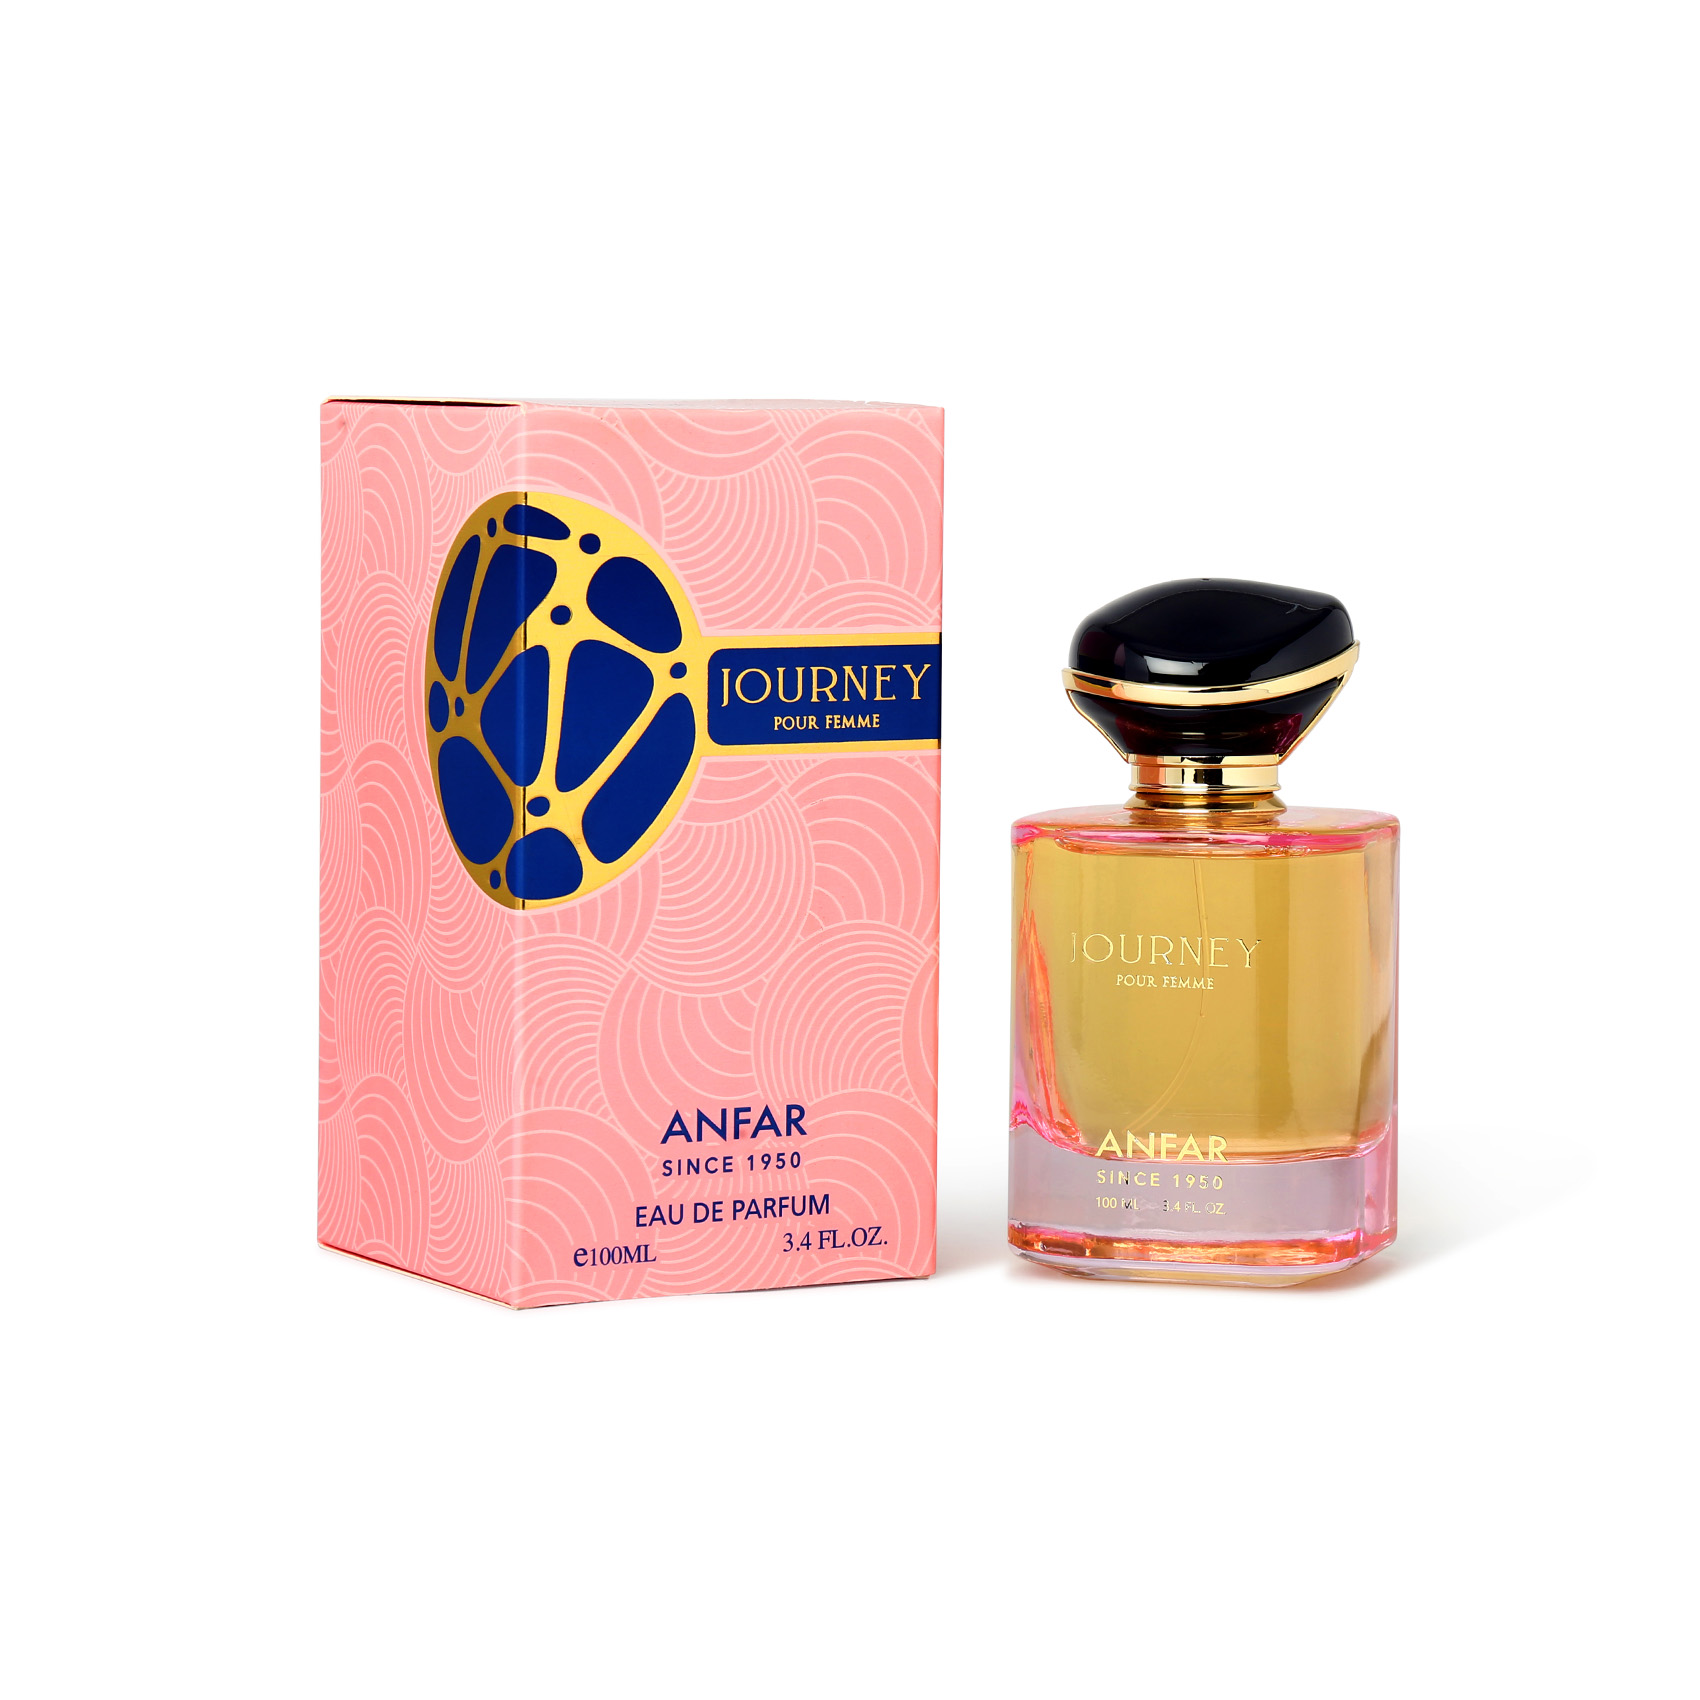 Journey Pour Femme Edp 100 ml Perfume For Women By Anfar